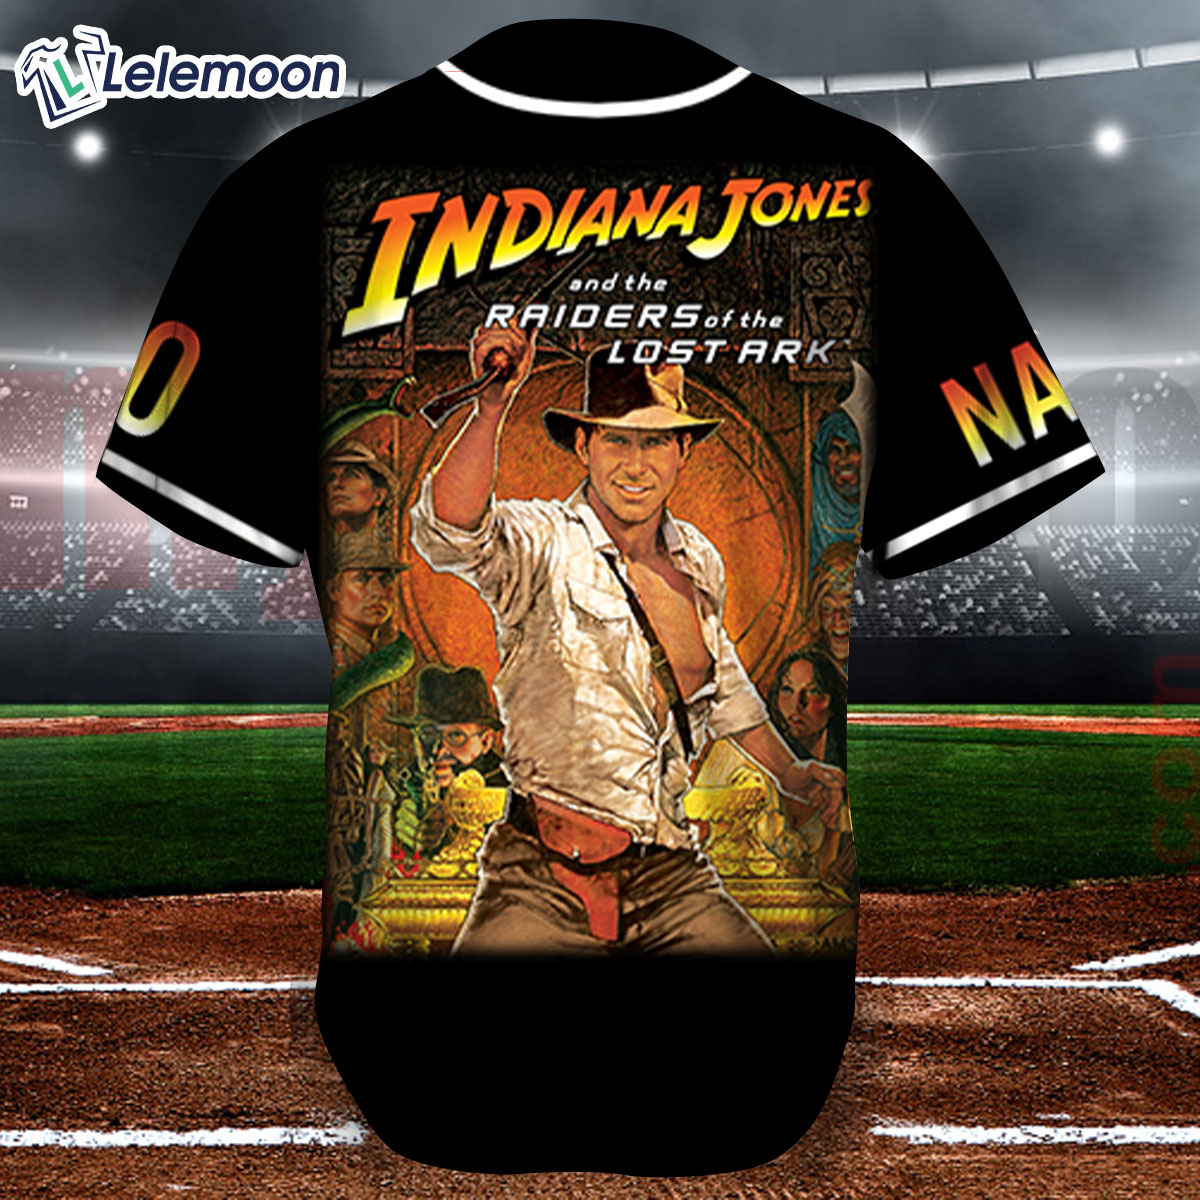 Indiana Jones Jersey Shirt, Indiana Jones Baseball Jersey Shirt - Lelemoon